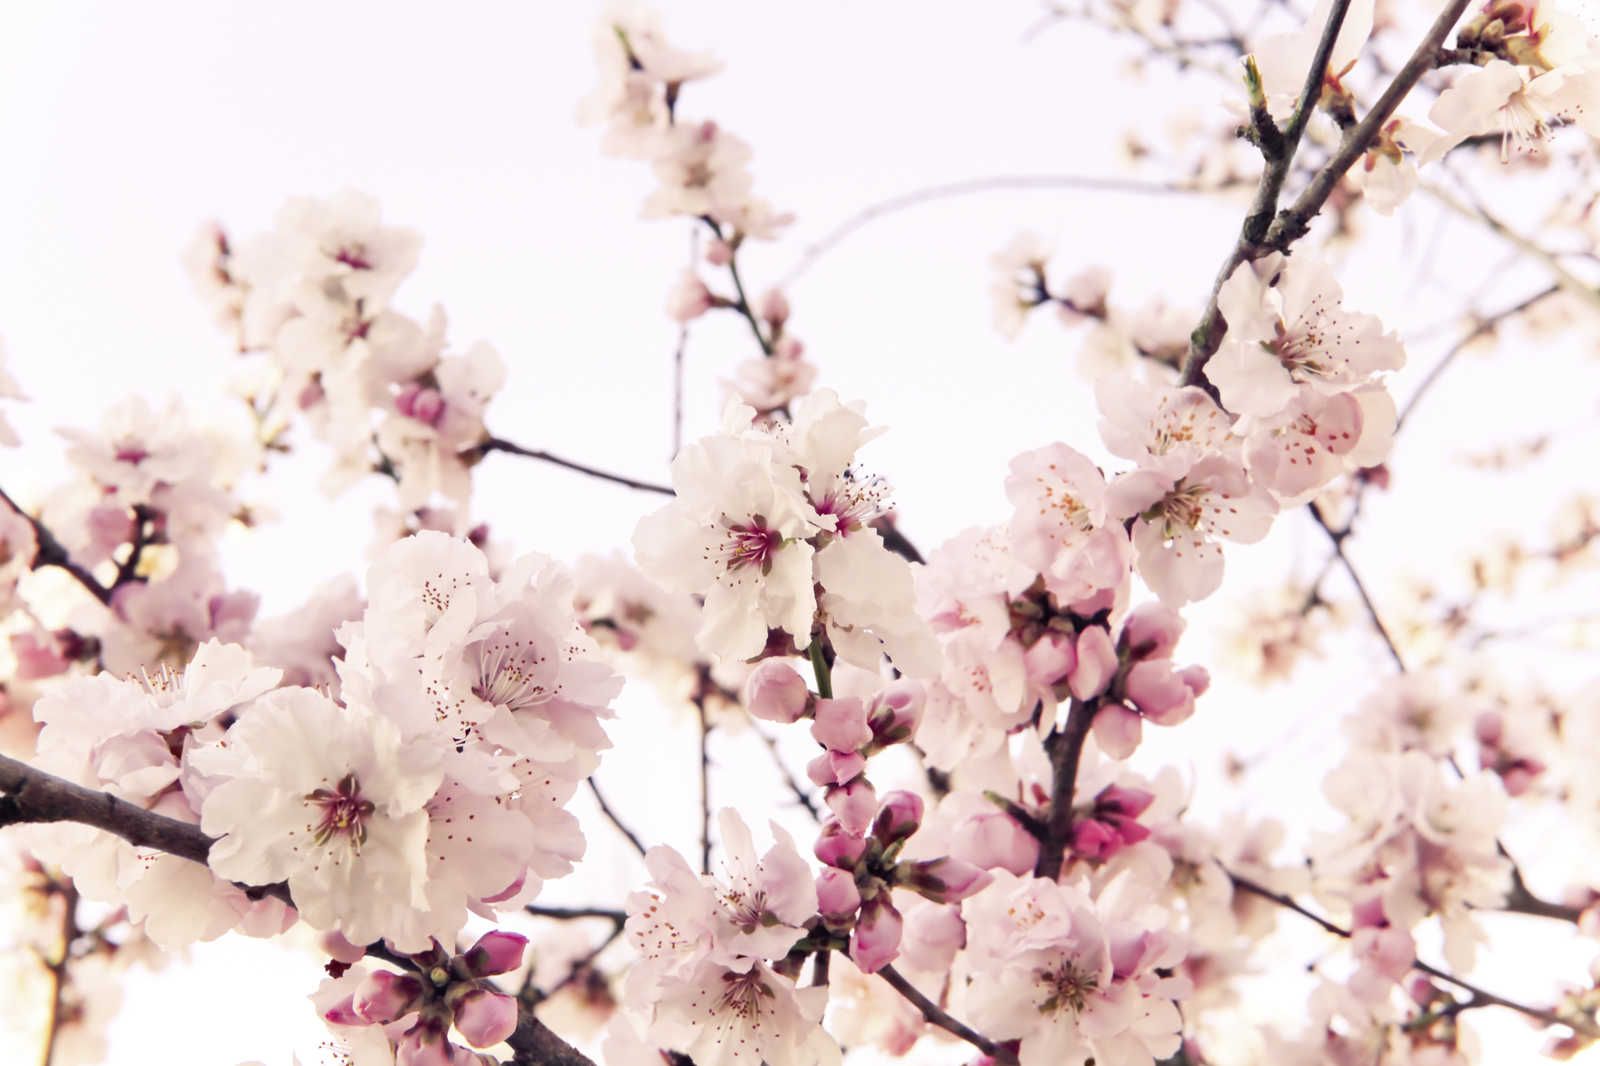             Natur Leinwandbild mit Kirschblüten – 0,90 m x 0,60 m
        